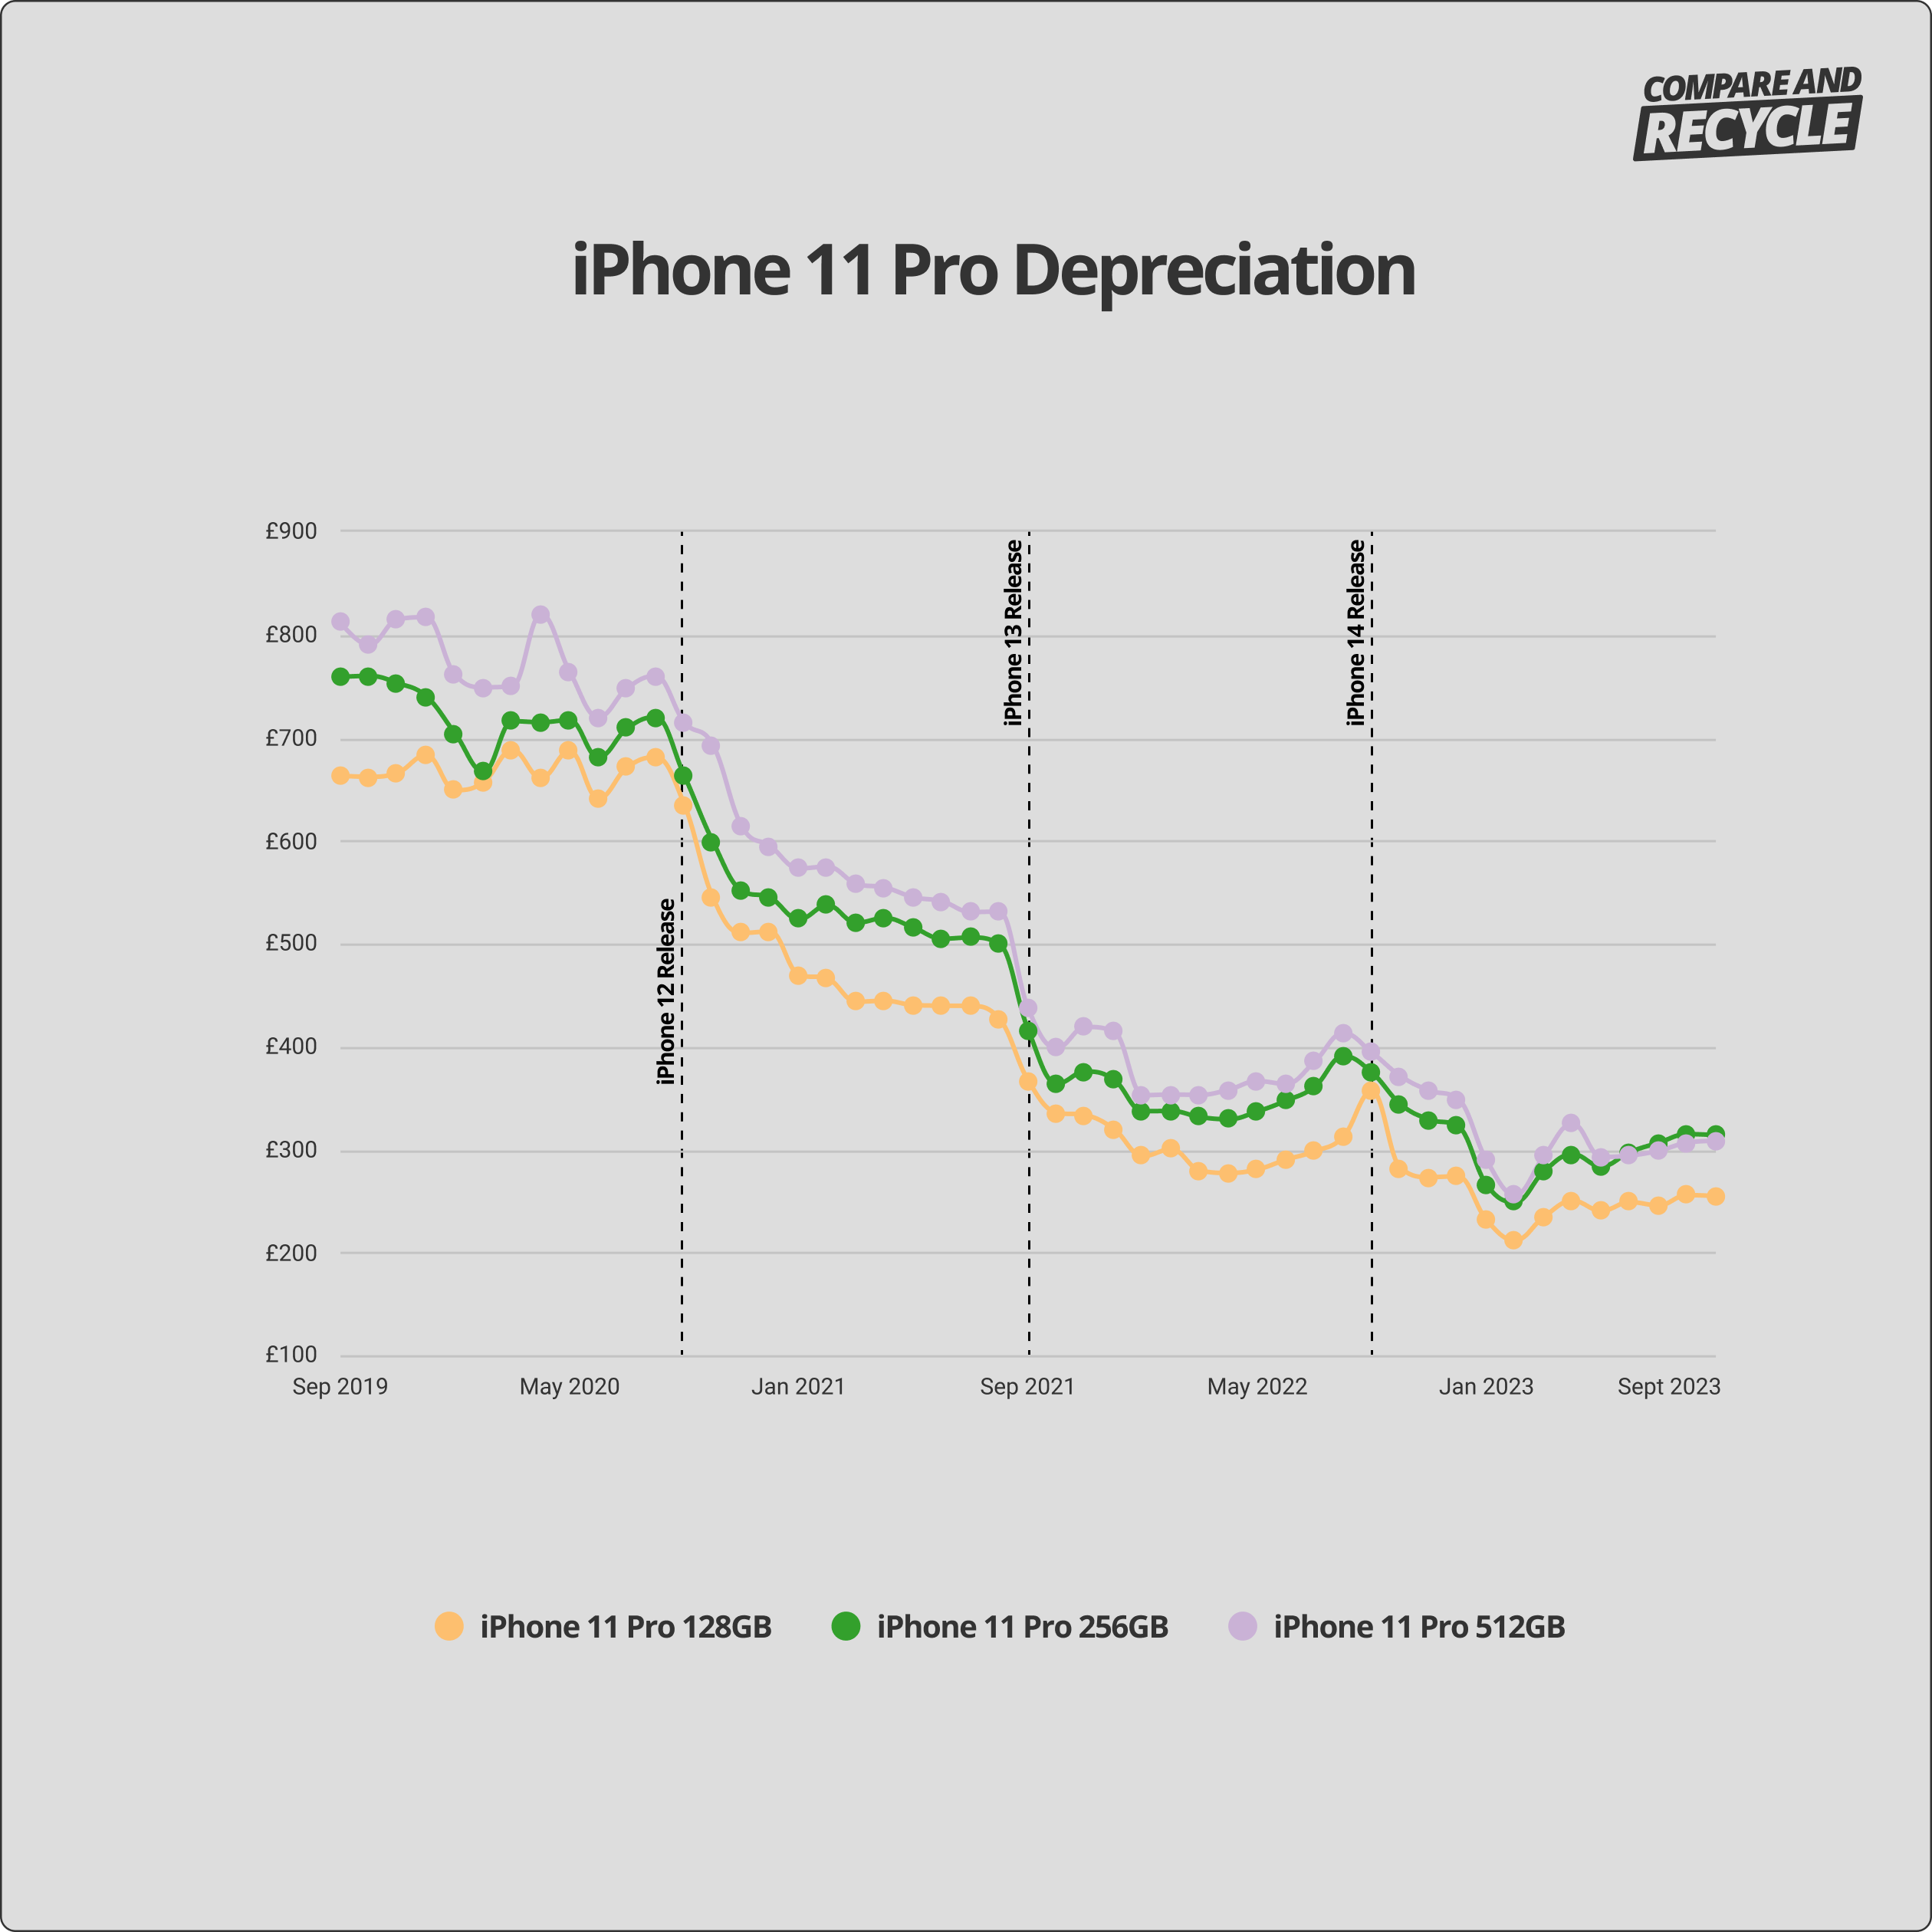 iPhone 11 Pro depreciation graph